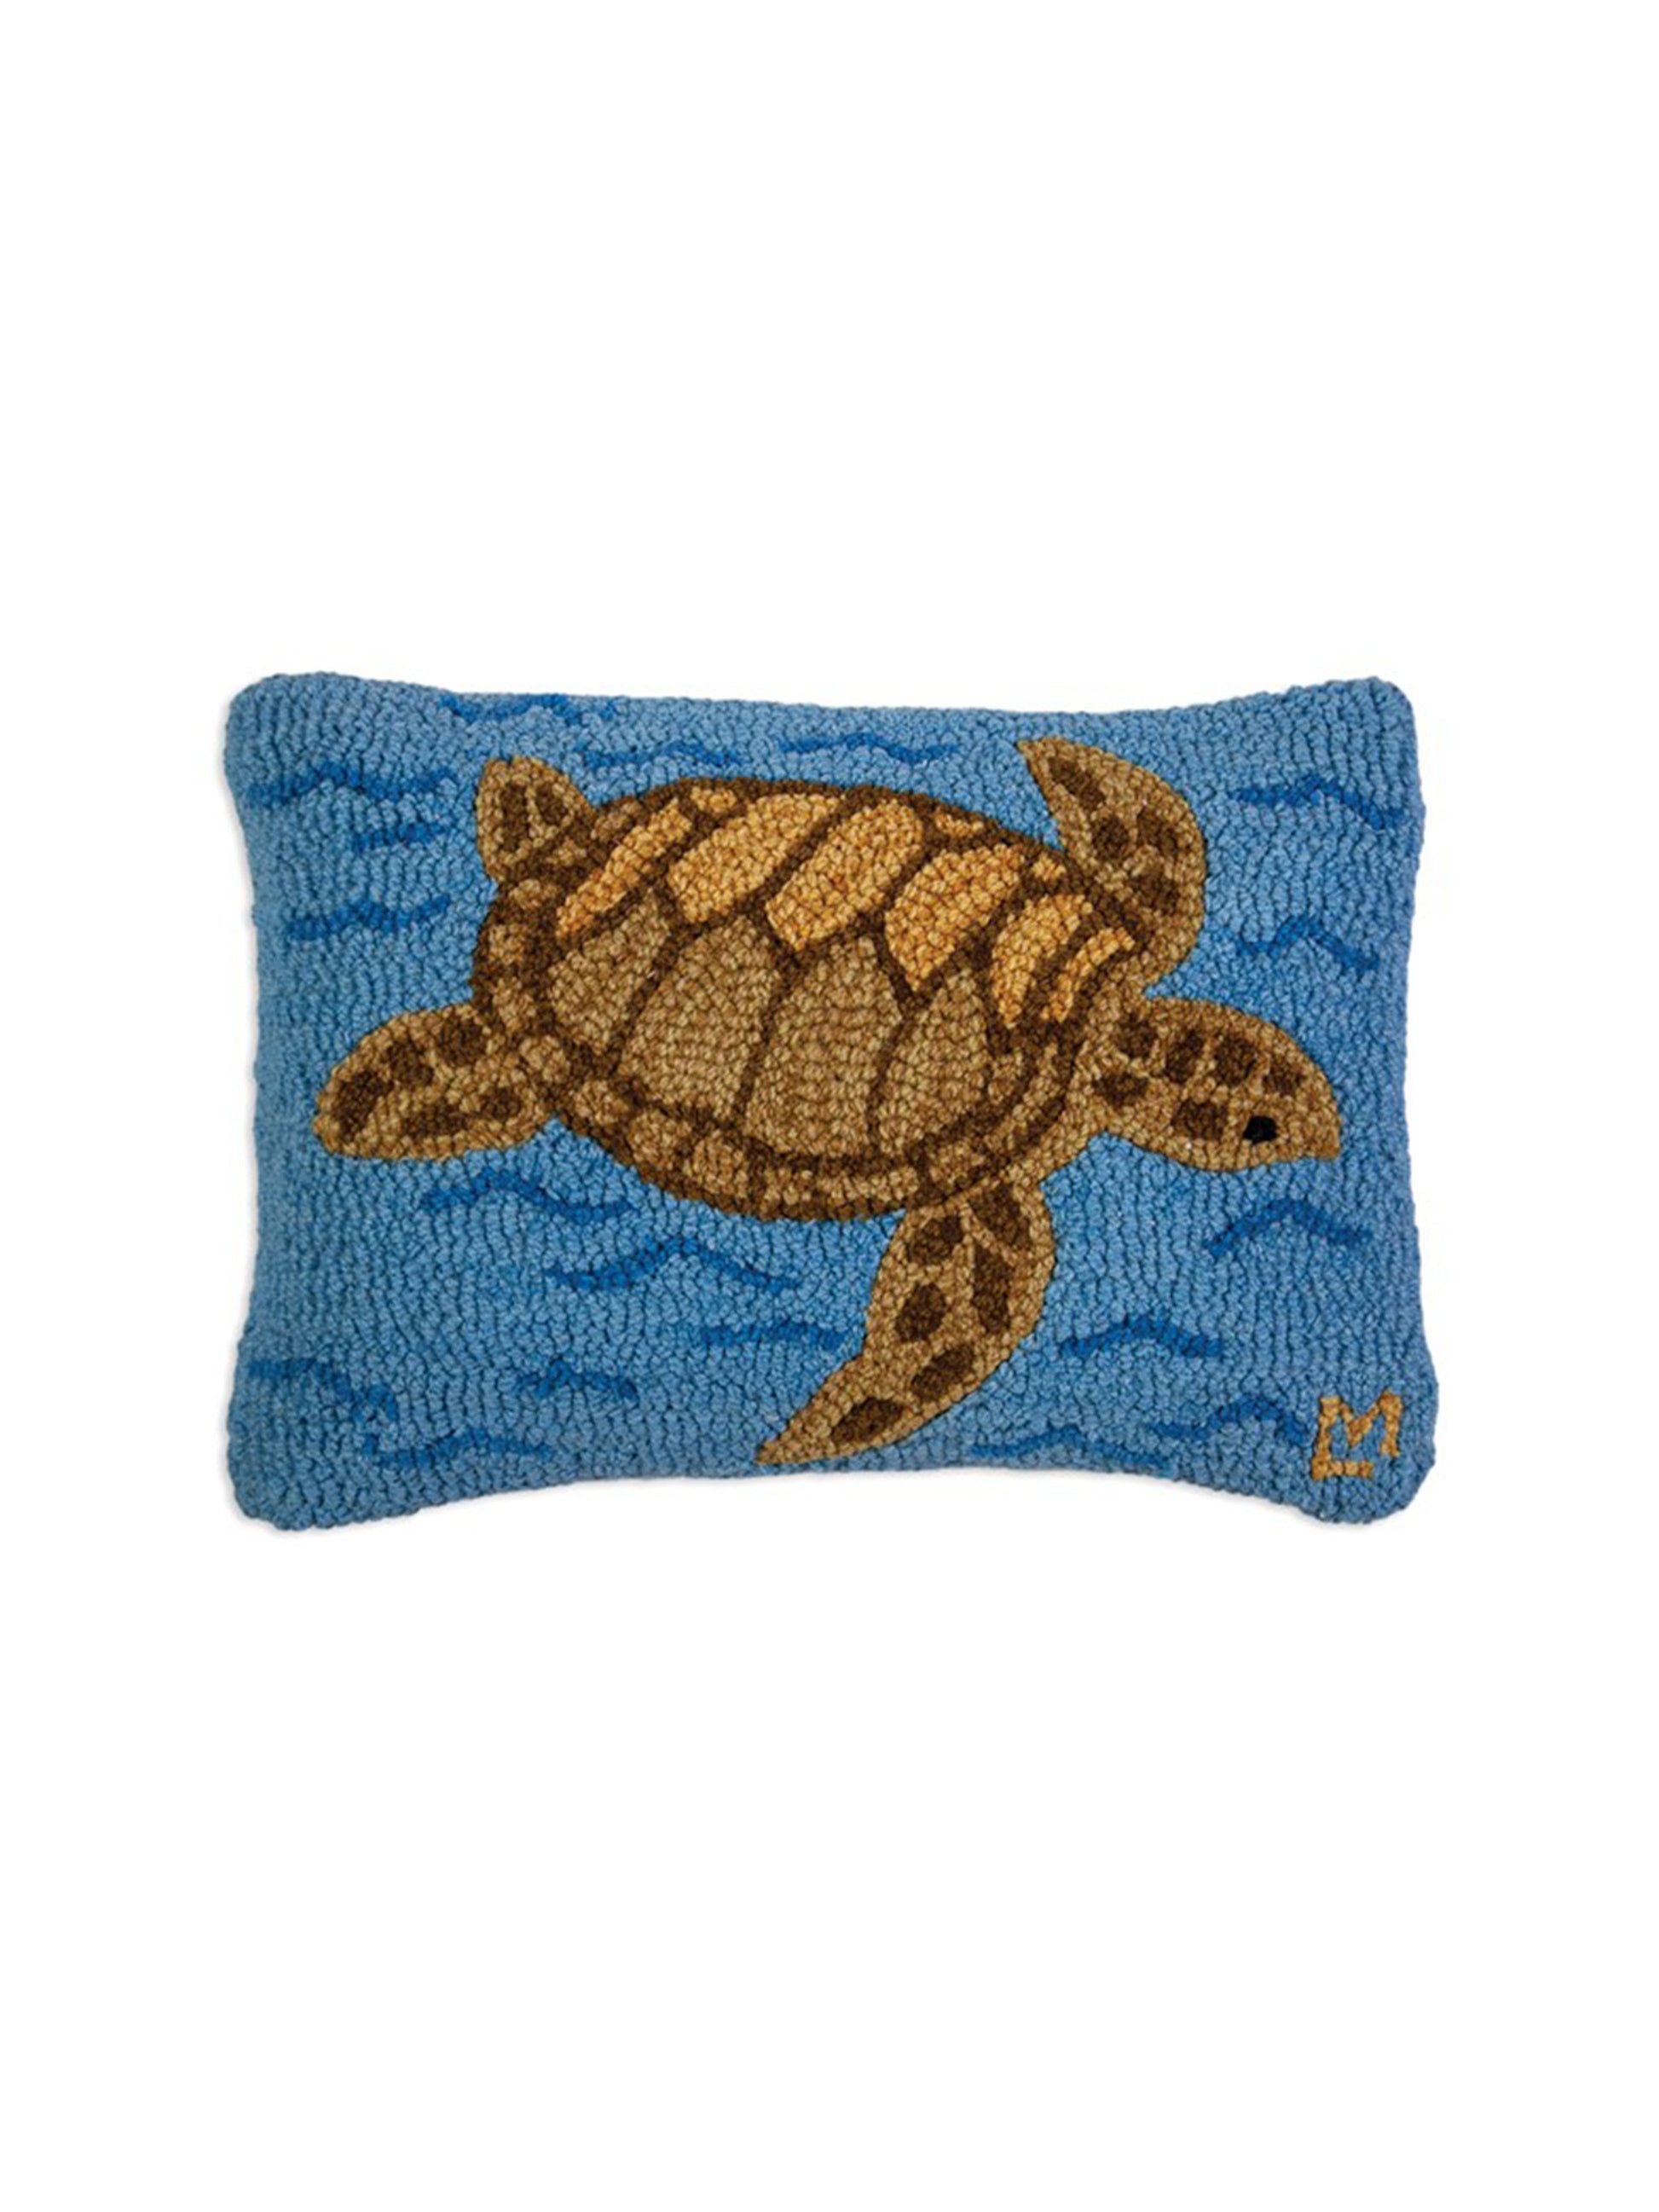 Loggerhead Turtle Hooked Wool Pillow Weston Table